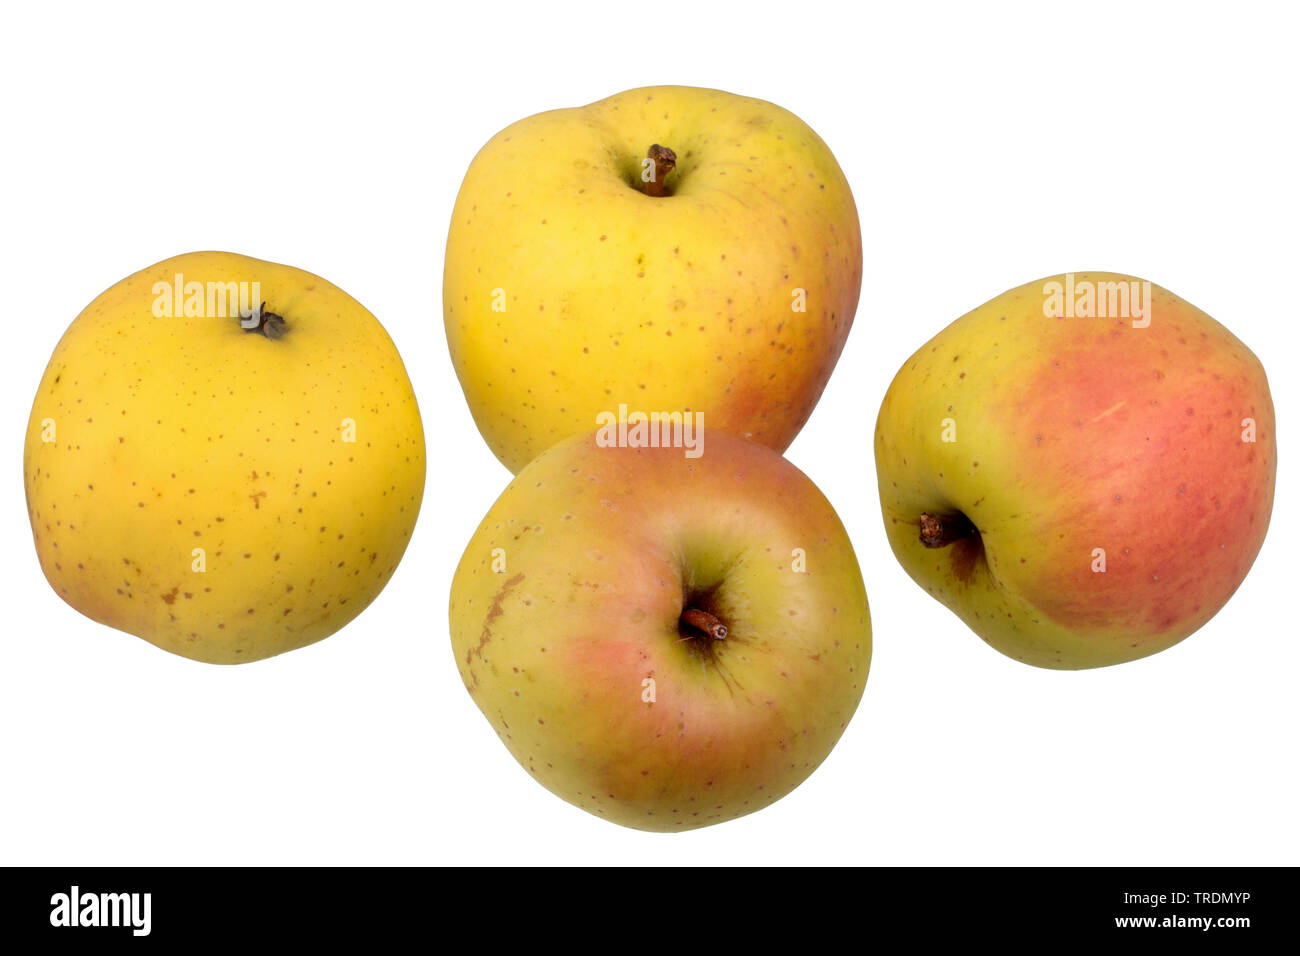 apple (Malus domestica 'Gelber Bellefleur', Malus domestica Gelber Bellefleur), apples of the cultivar Gelber Bellefleur Stock Photo